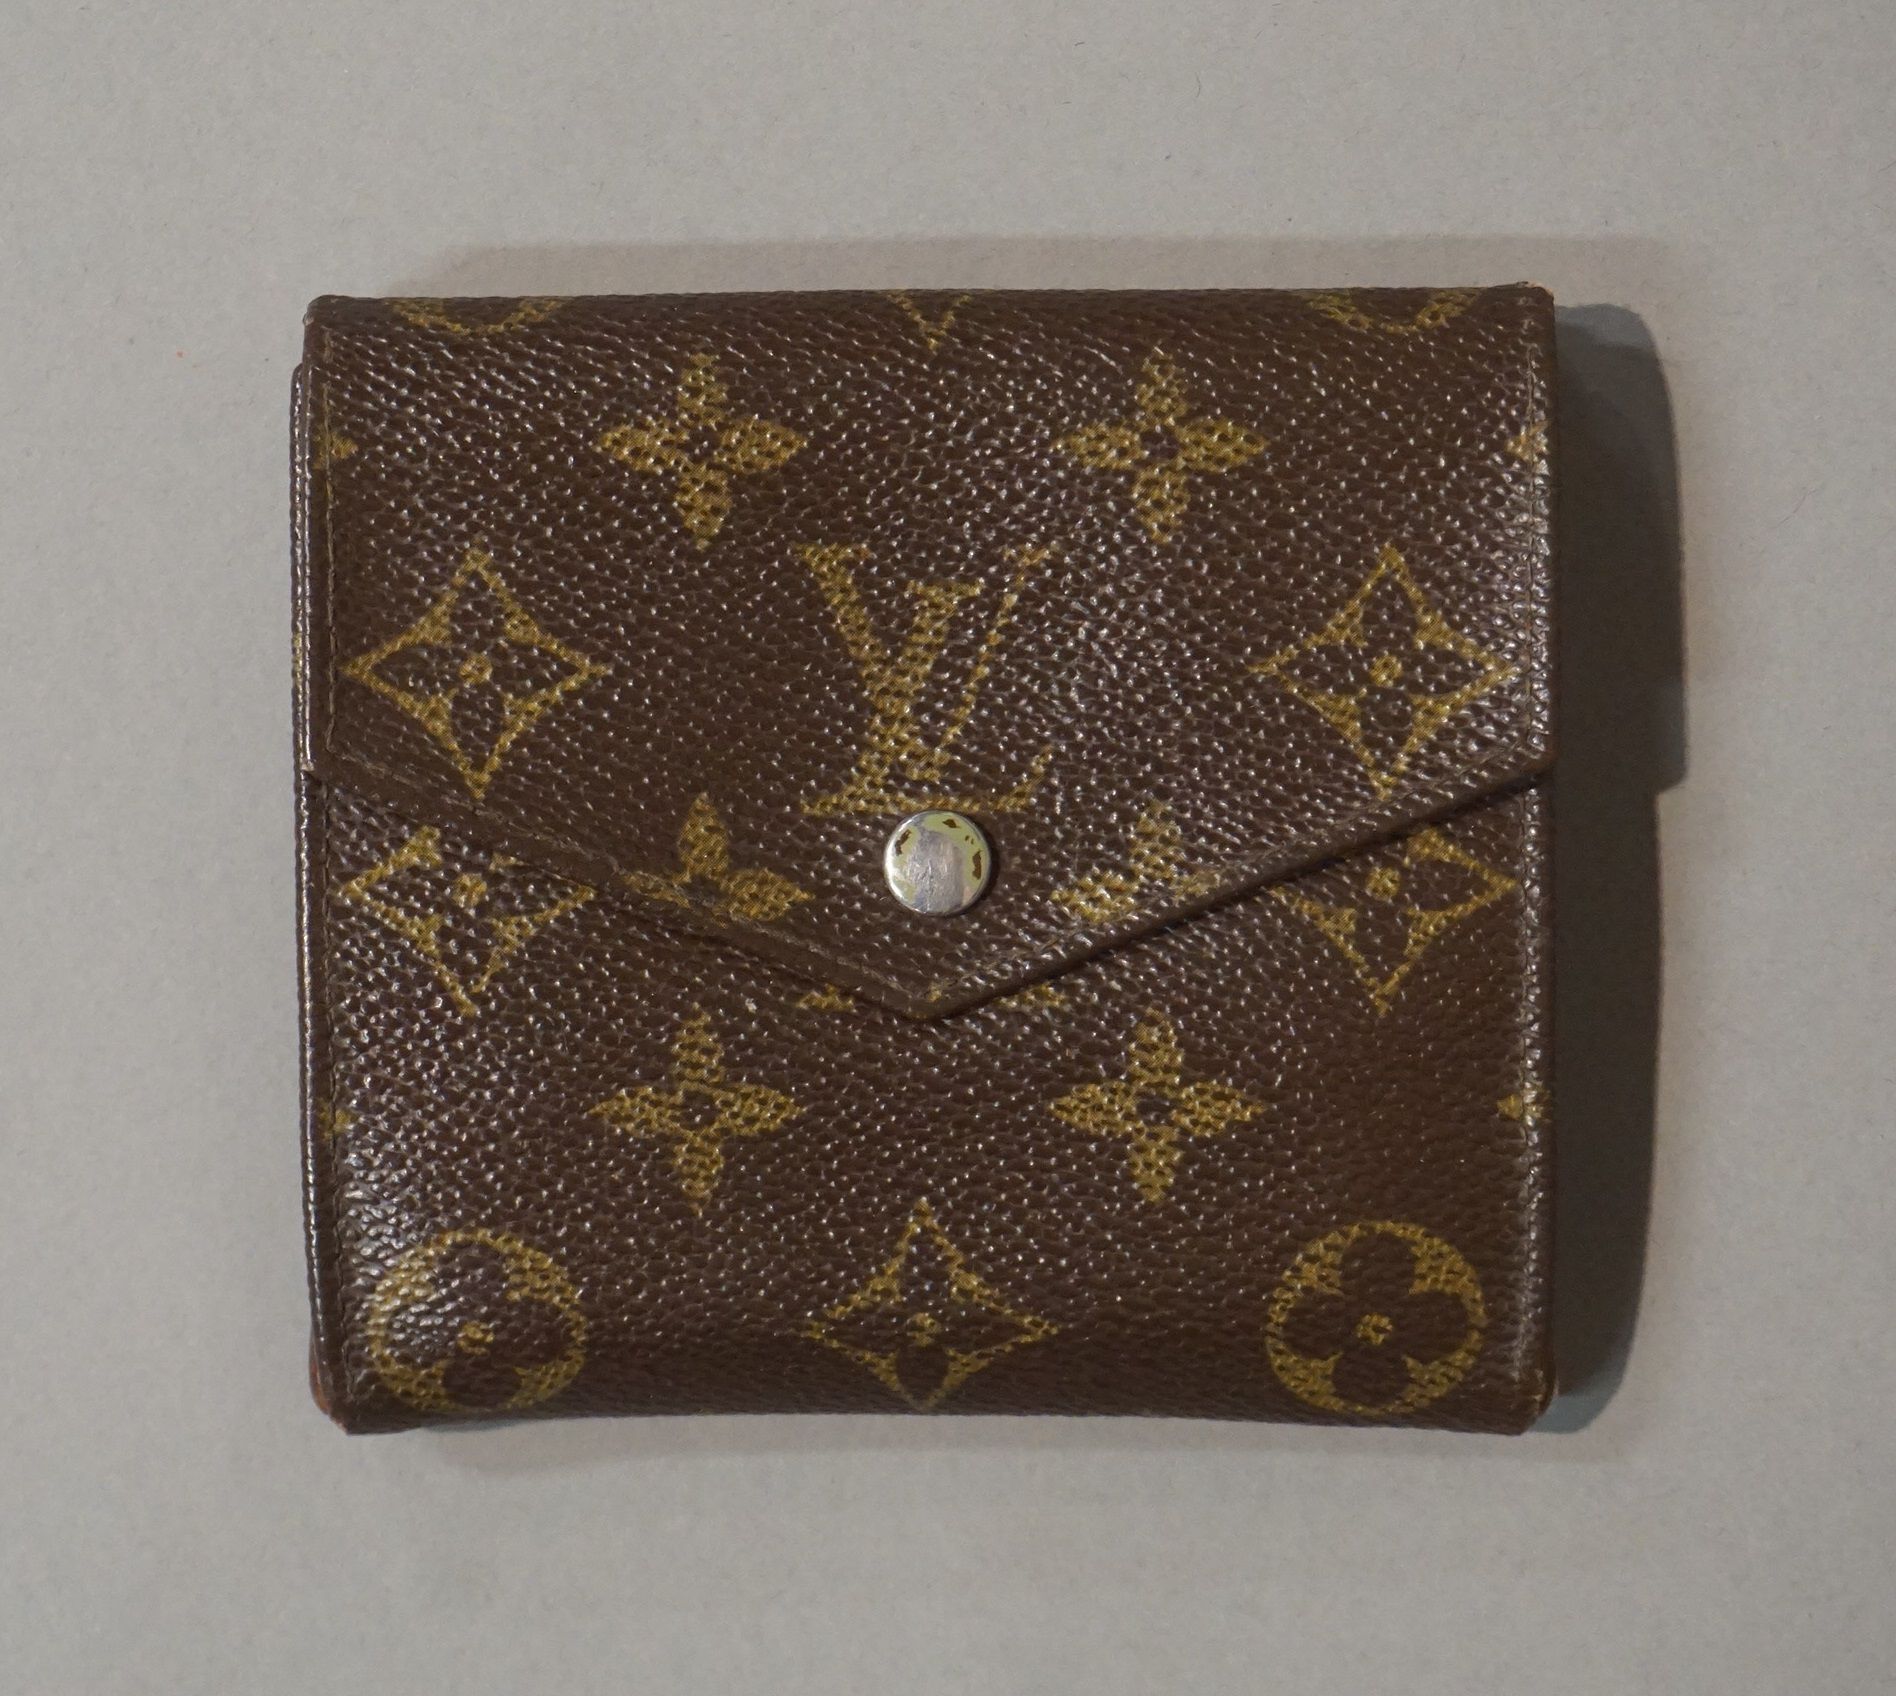 VUITTON Wallet. 11x10 cm